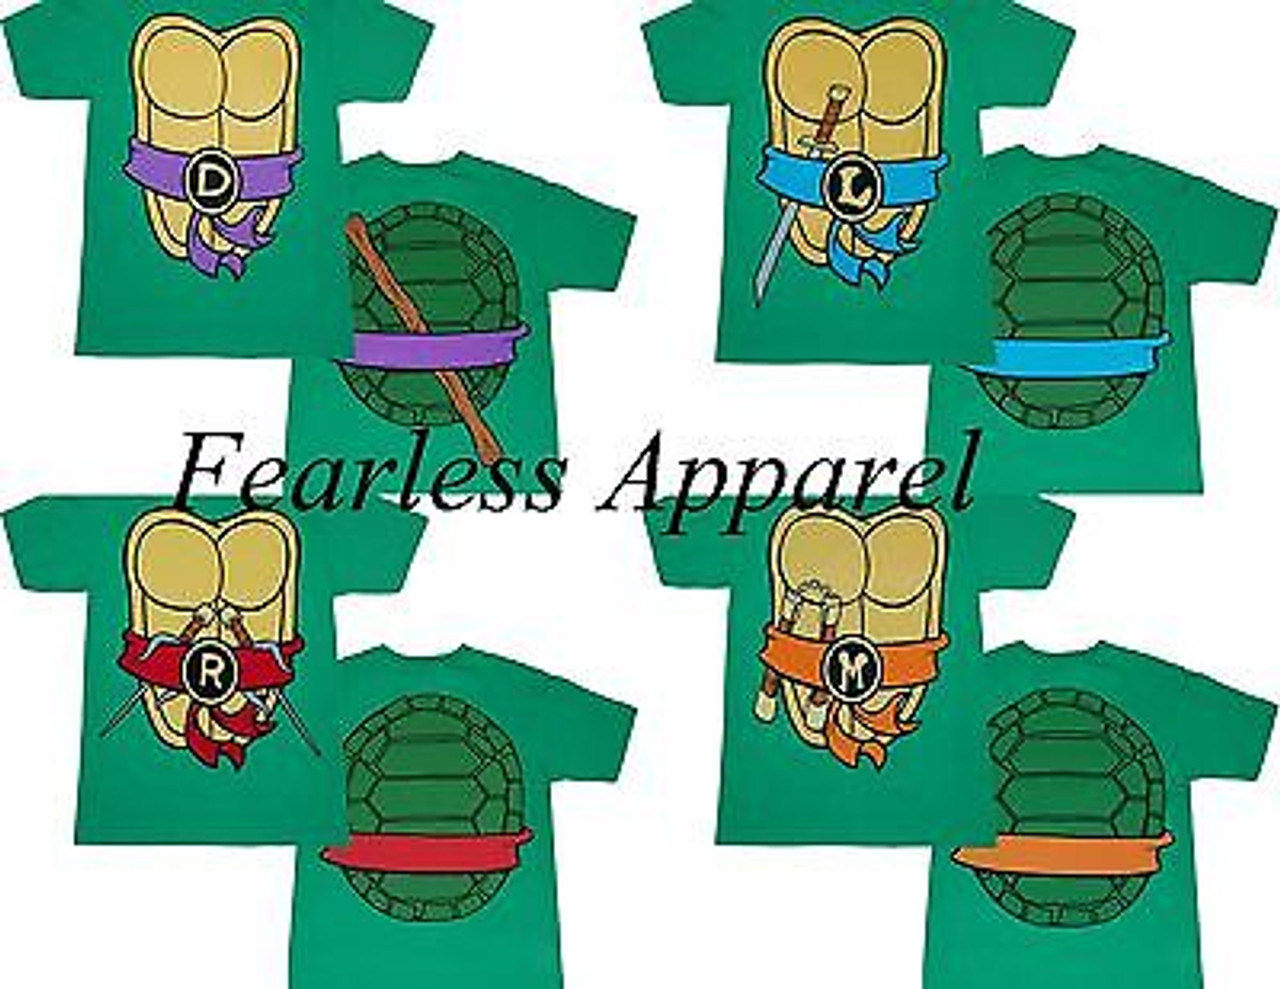 I Am TMNT Teenage Mutant Ninja Turtles Mens Adult Costume T Tee Shirt S-3xl - 2XL Donatello